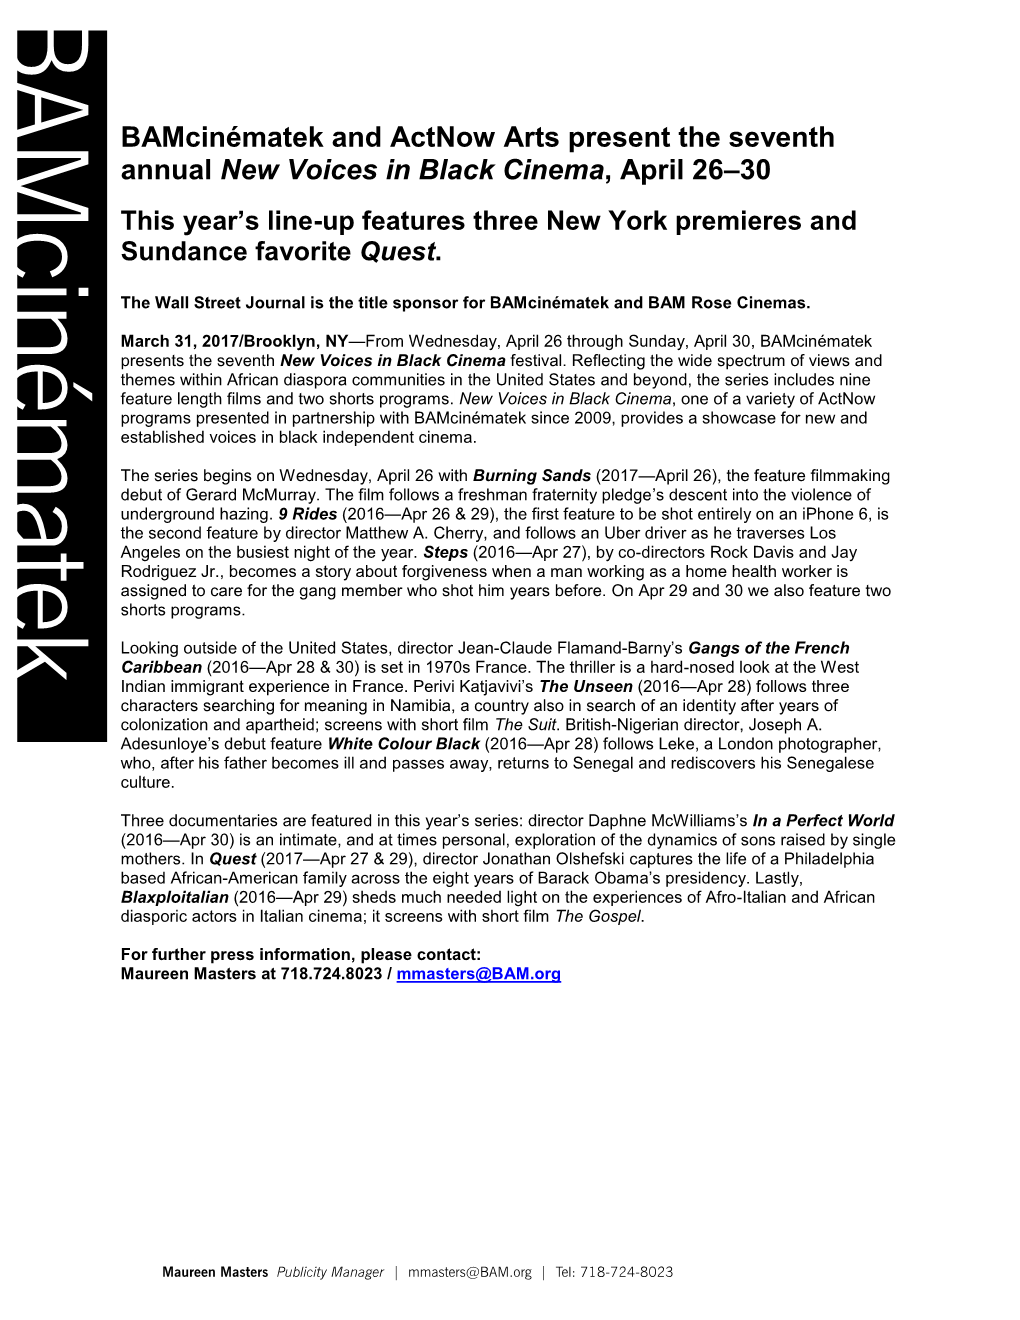 Bamcinématek and Actnow Arts Present the Seventh Annual New Voices in Black Cinema, April 26–30